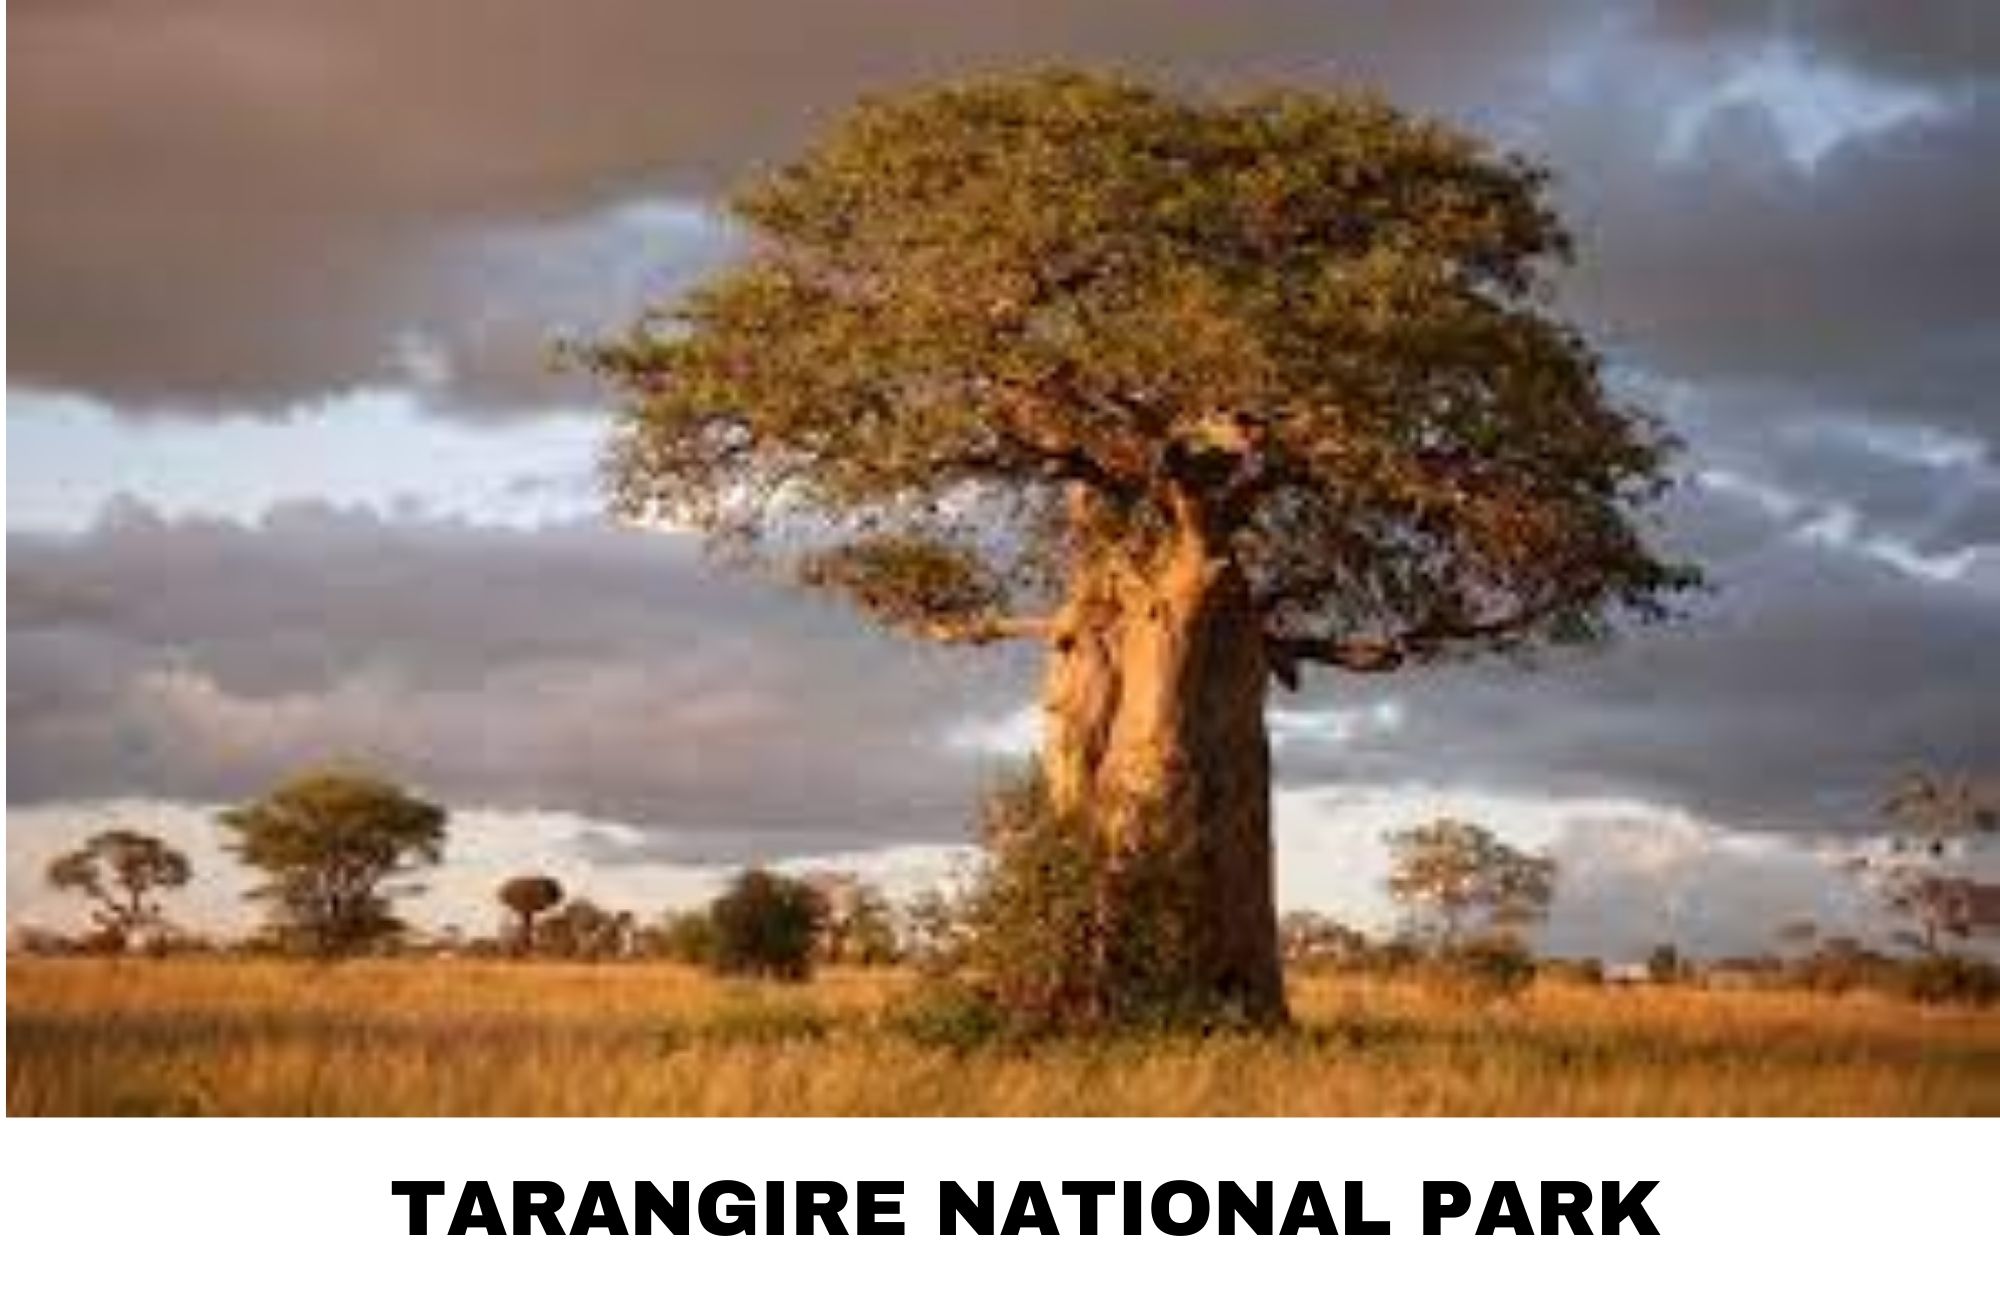 Tarangire National Park, with its massive baobab trees